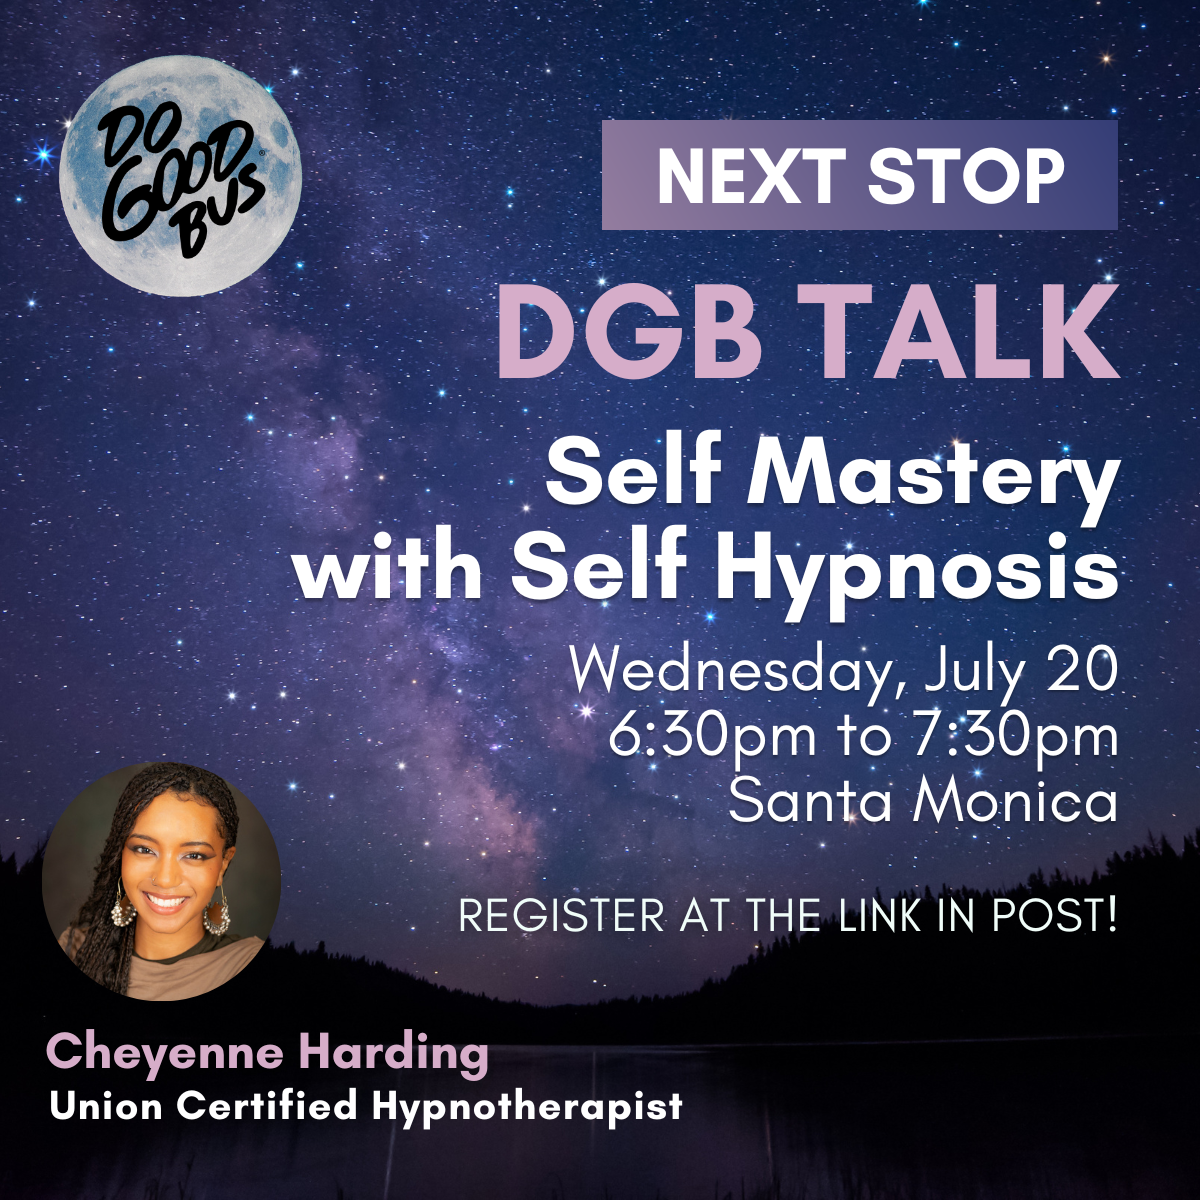 Do Good Bus TALKS: Self Mastery with Self Hypnosis